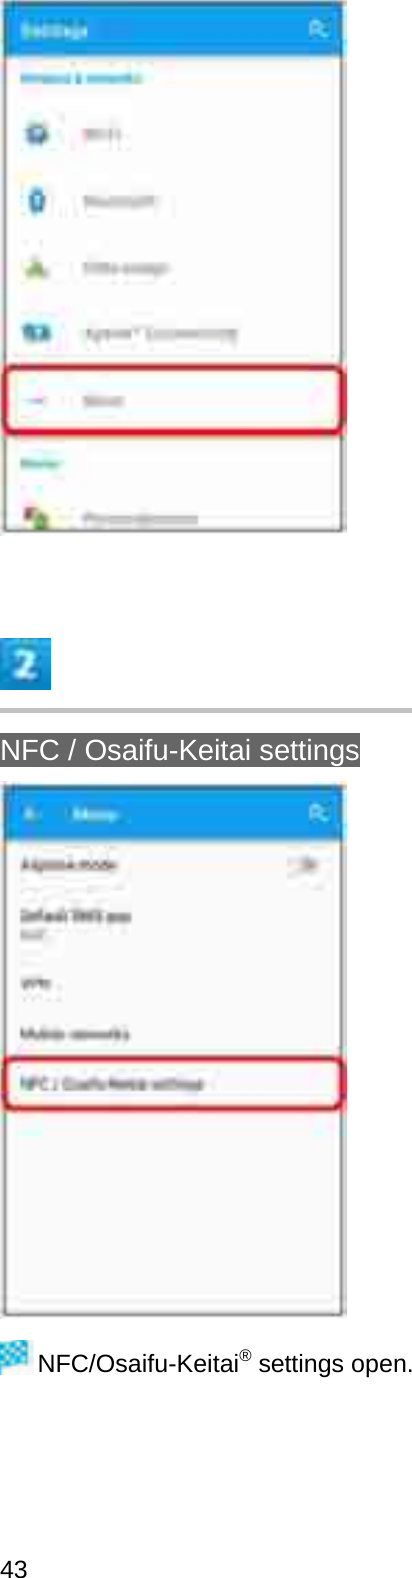 NFC / Osaifu-Keitai settingsNFC/Osaifu-Keitai®settings open.43